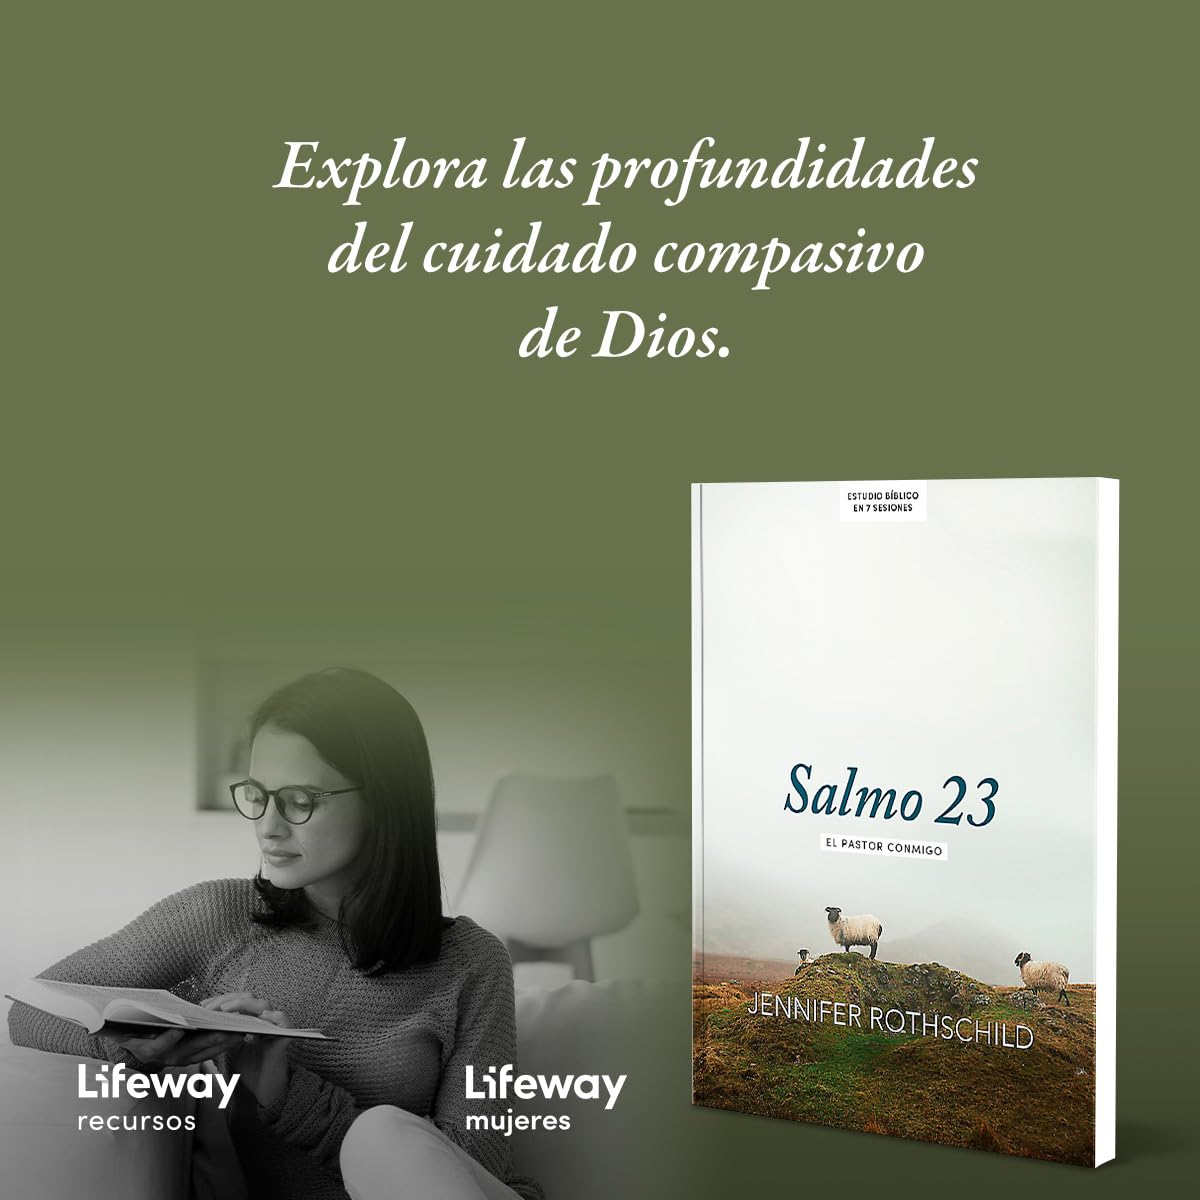 Salmo 23 - Estudio bíblico / SPA Psalm 23 (Spanish Edition)